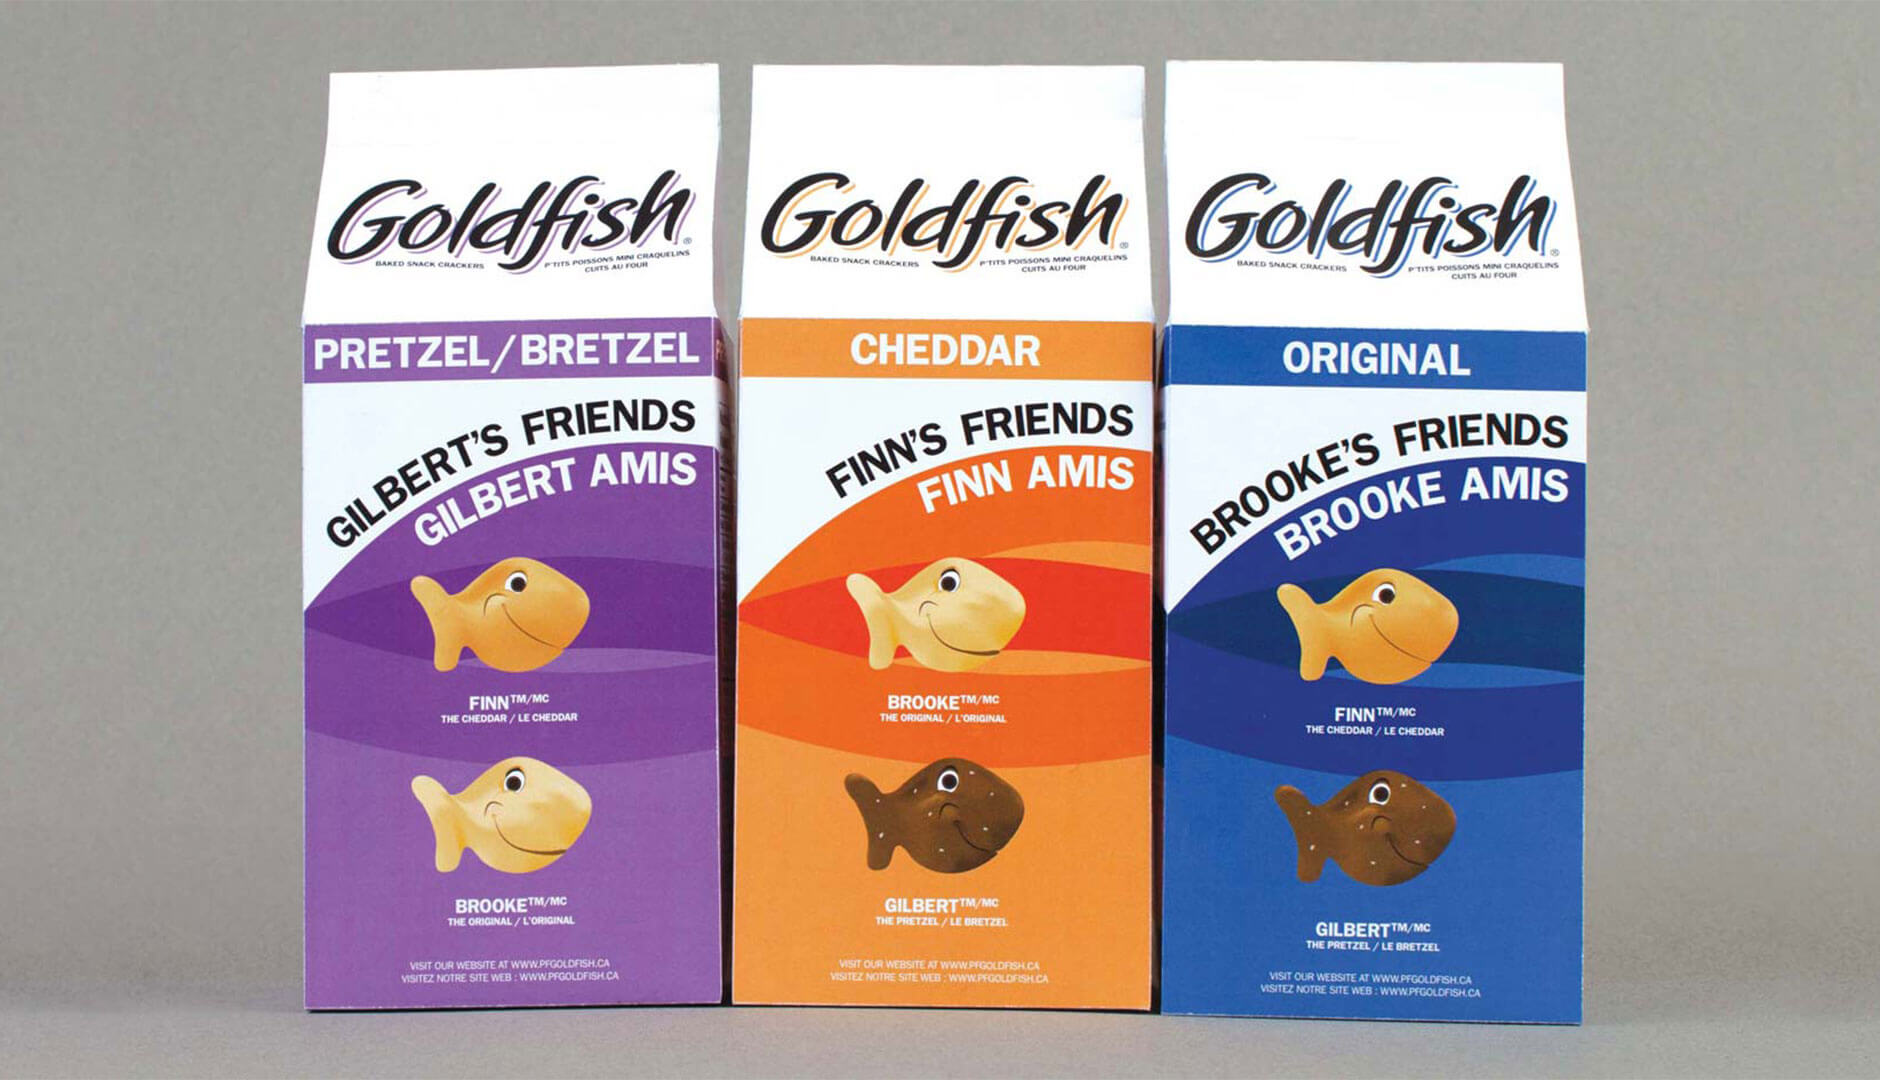 Goldfish Crackers Redesign Image 3